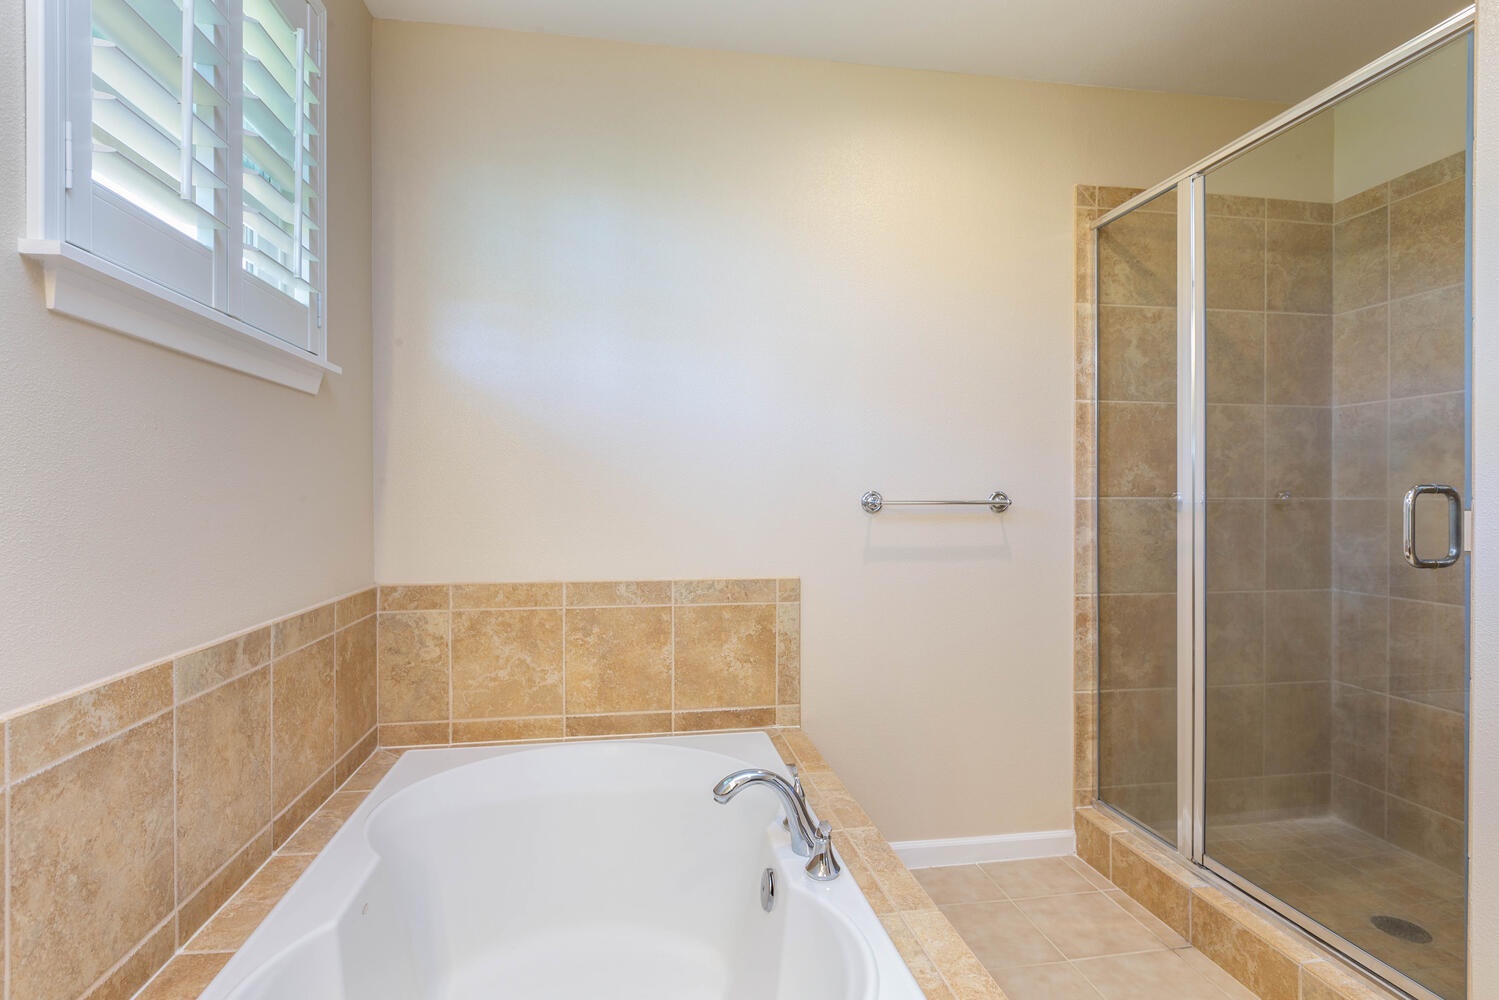 Princeville Vacation Rentals, Villa Nalani - Primary bathtub with separate tile shower